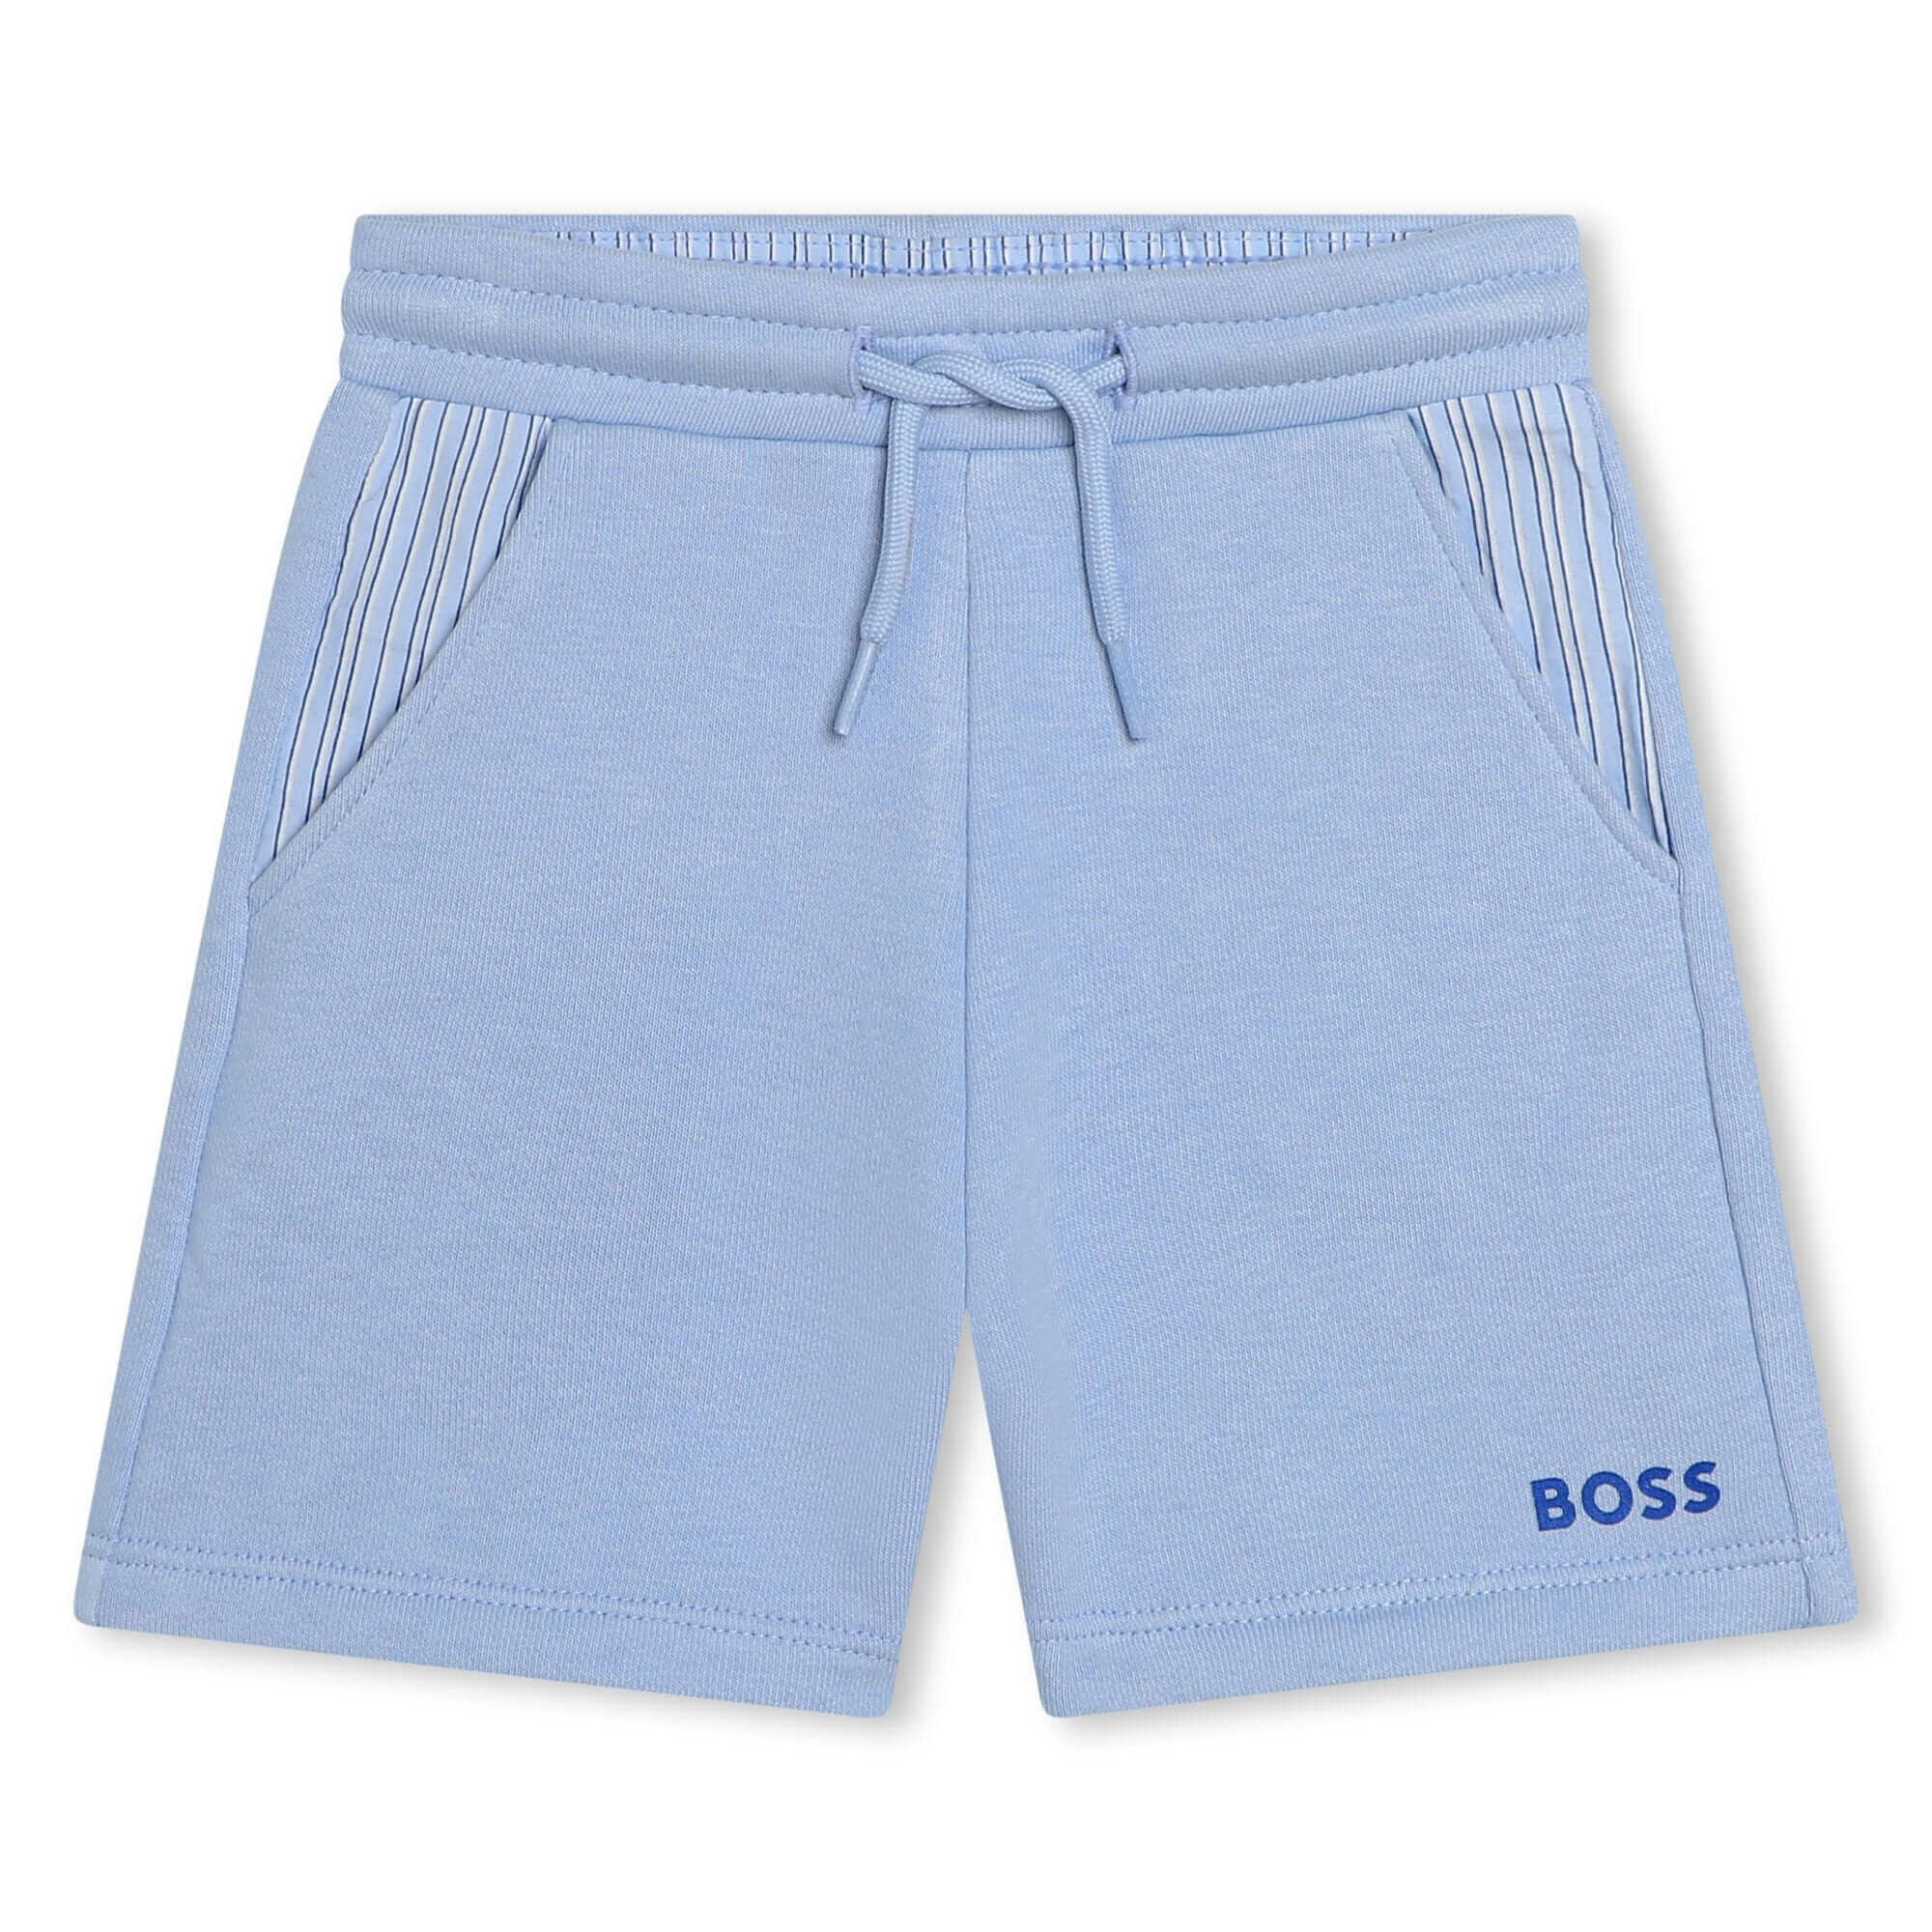 BOSS Boys White & Pale Blue Short Set